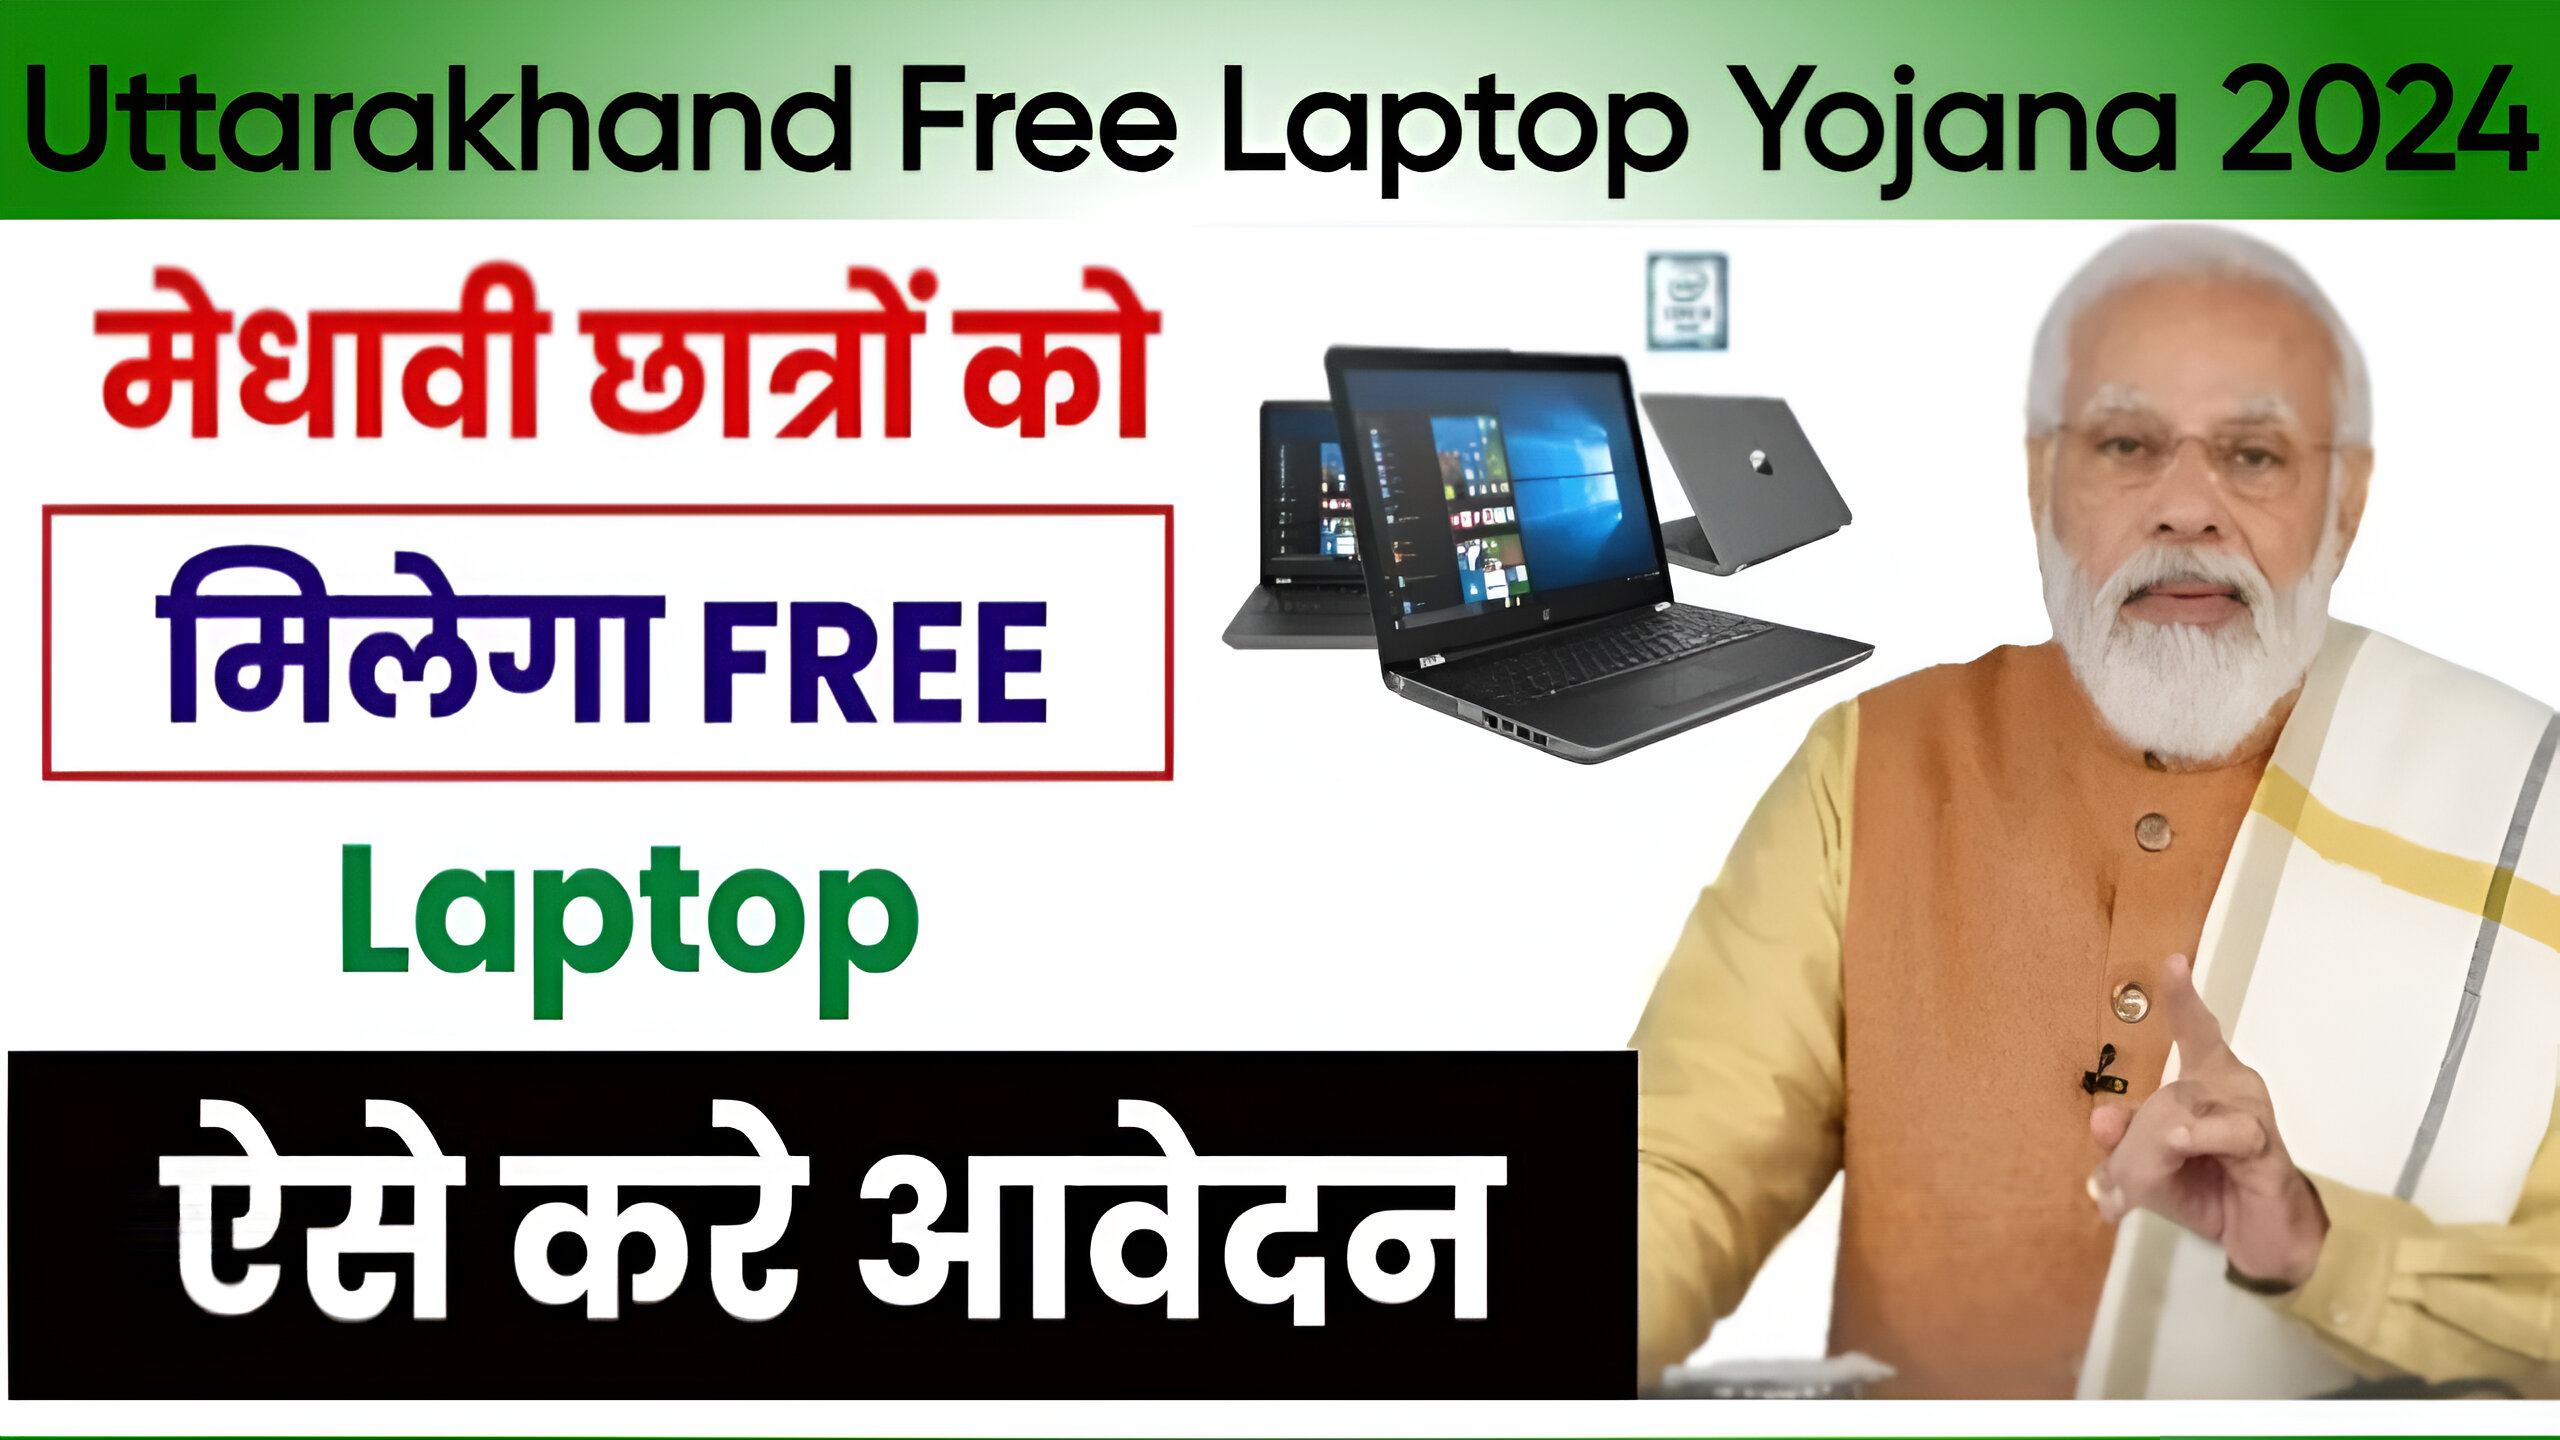 Uttarakhand Free Laptop Yojana 2024